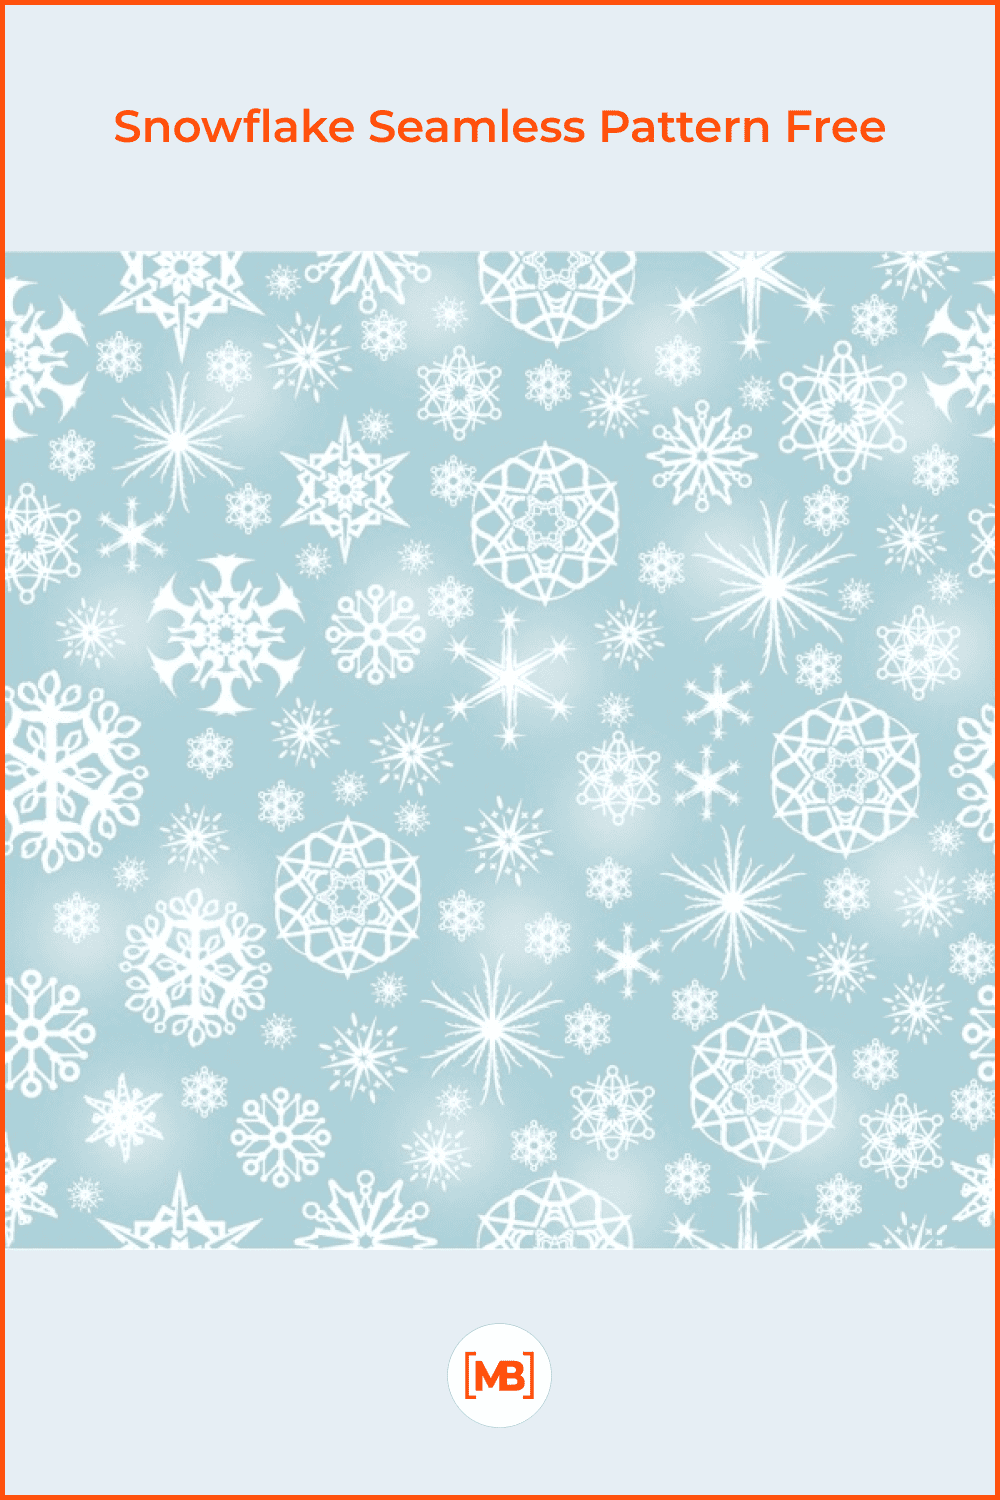 Snowflake Seamless Pattern Free.